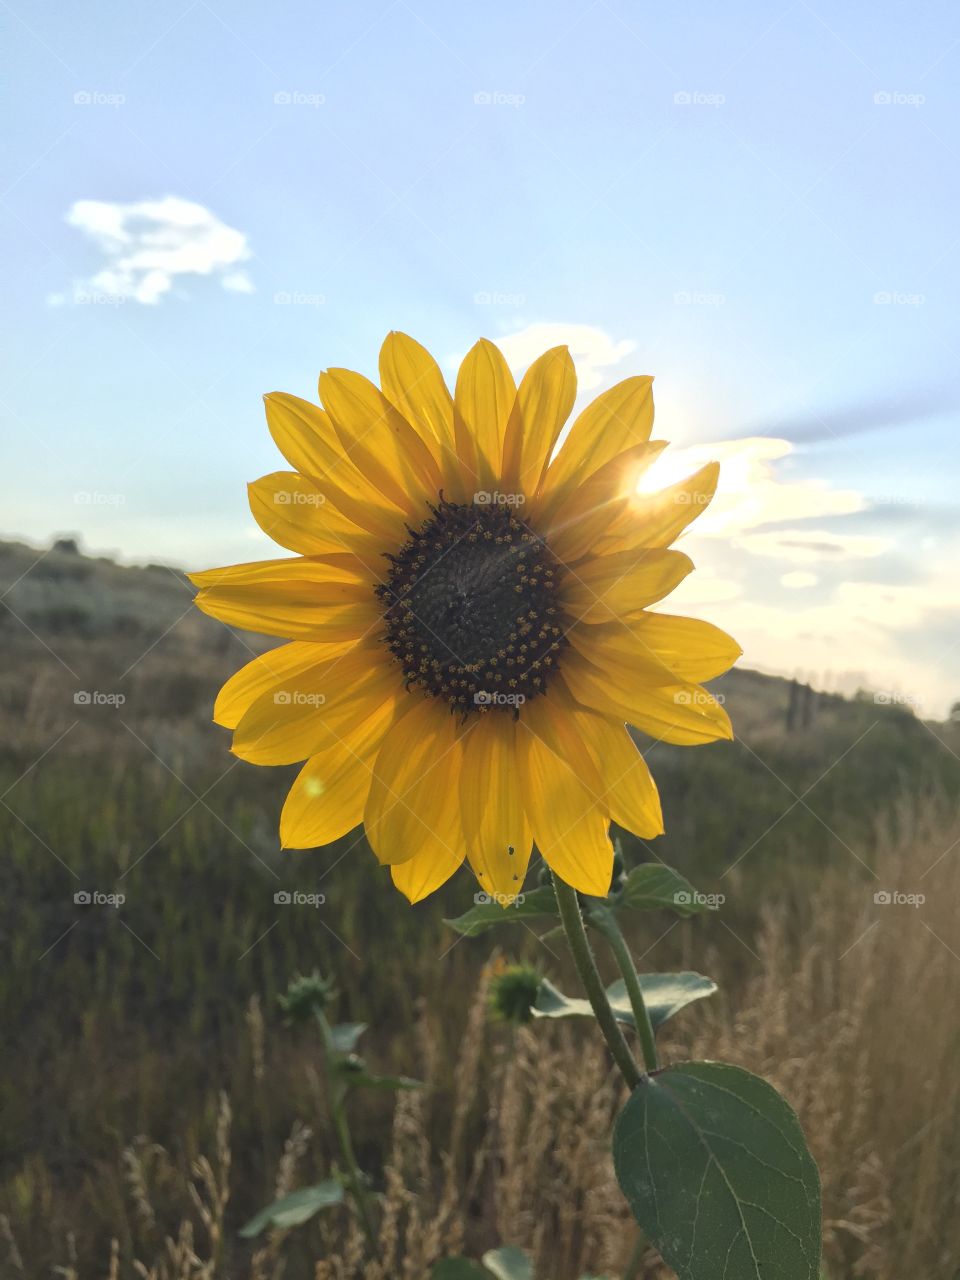 Sunflower sun set